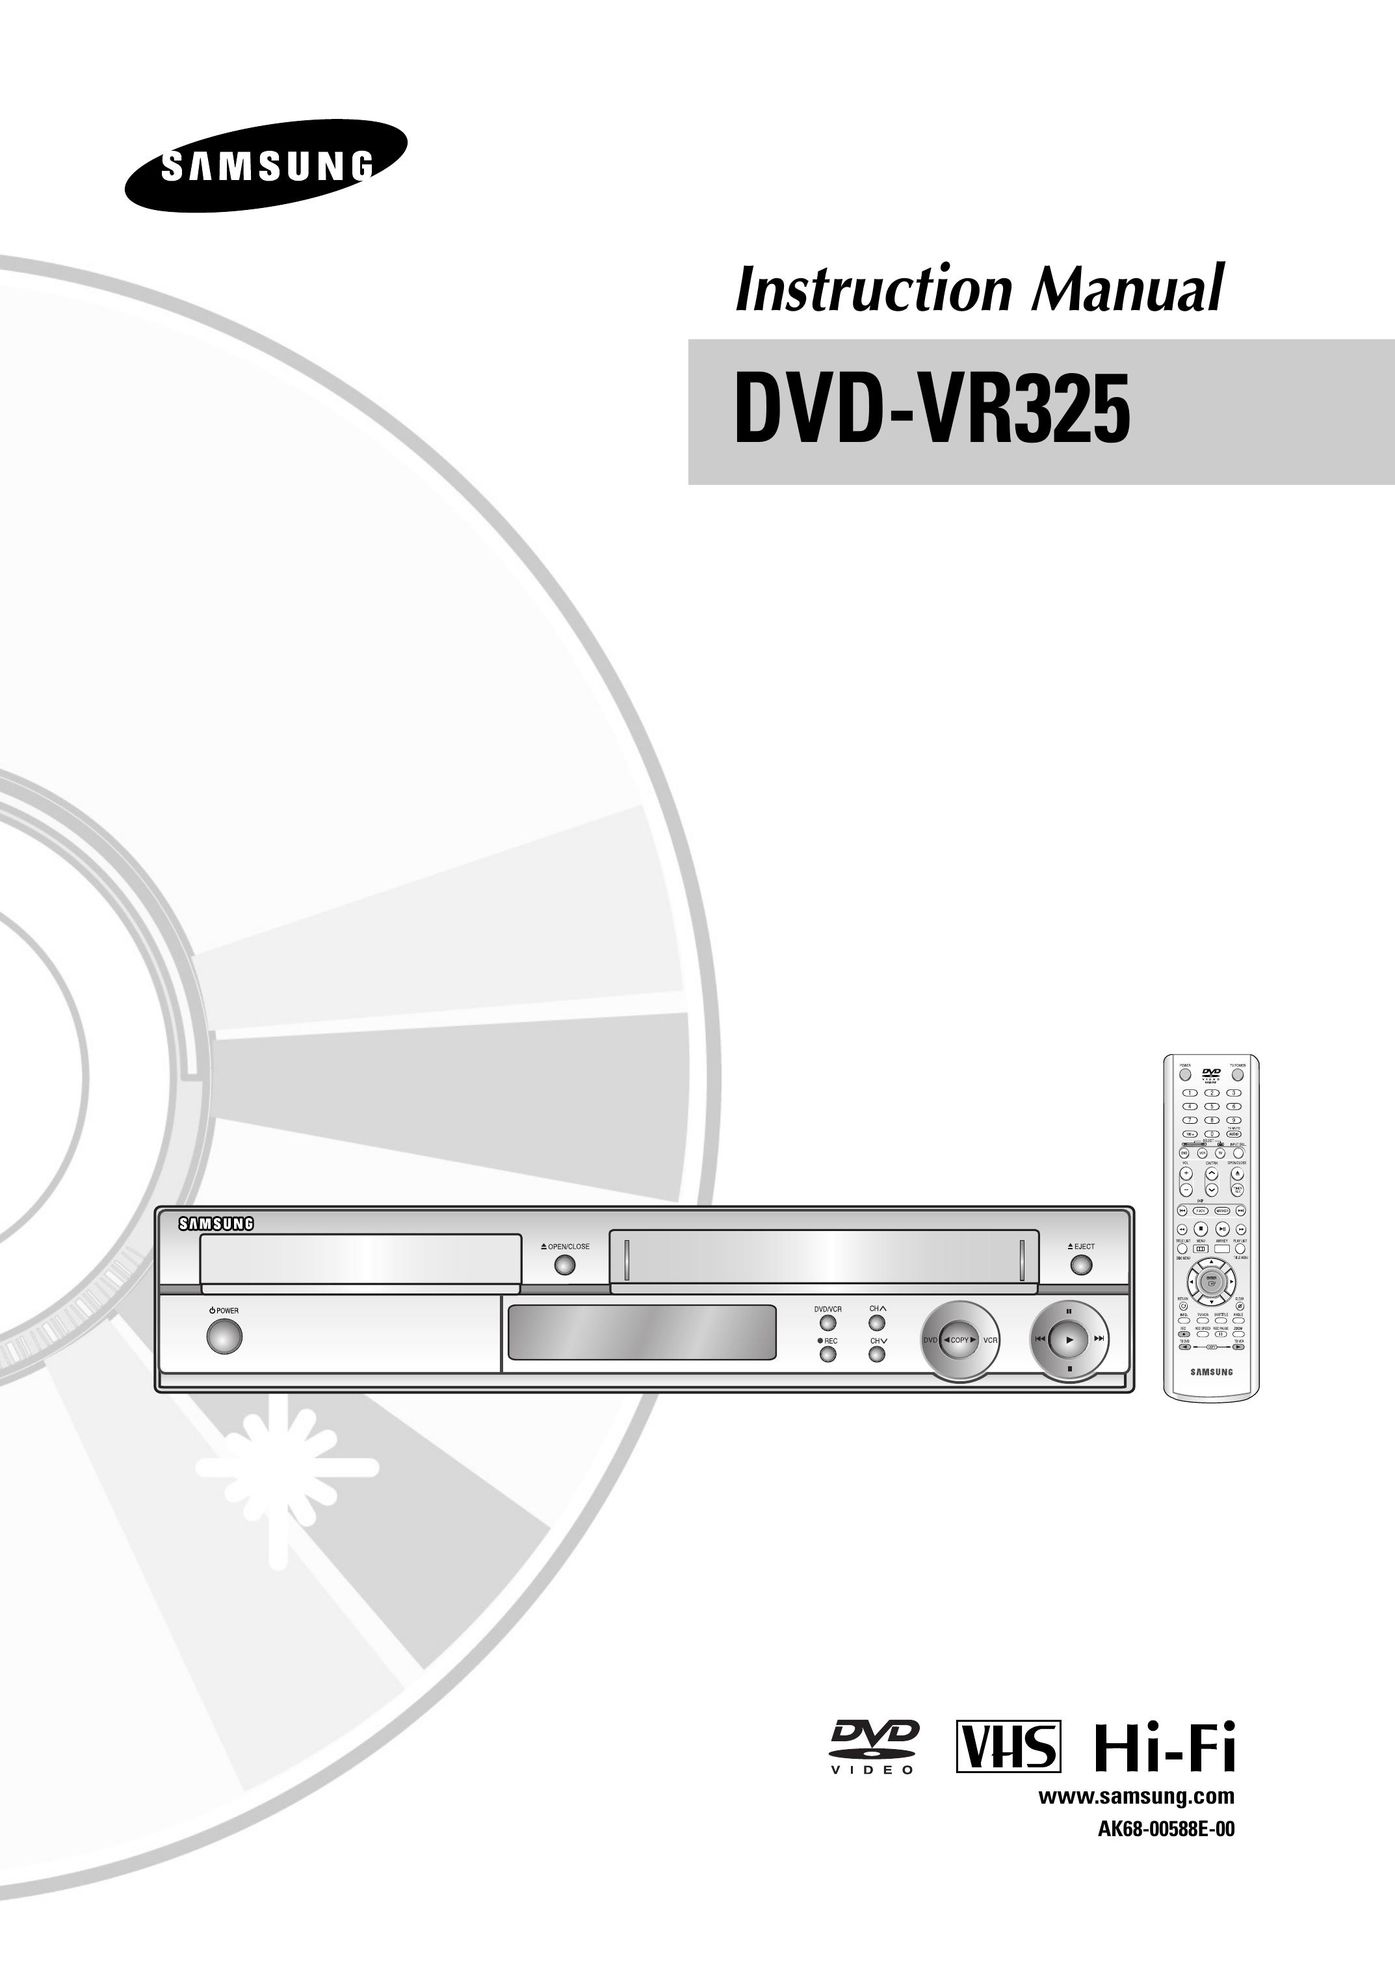 Samsung DVD-VR325 MP3 Player User Manual